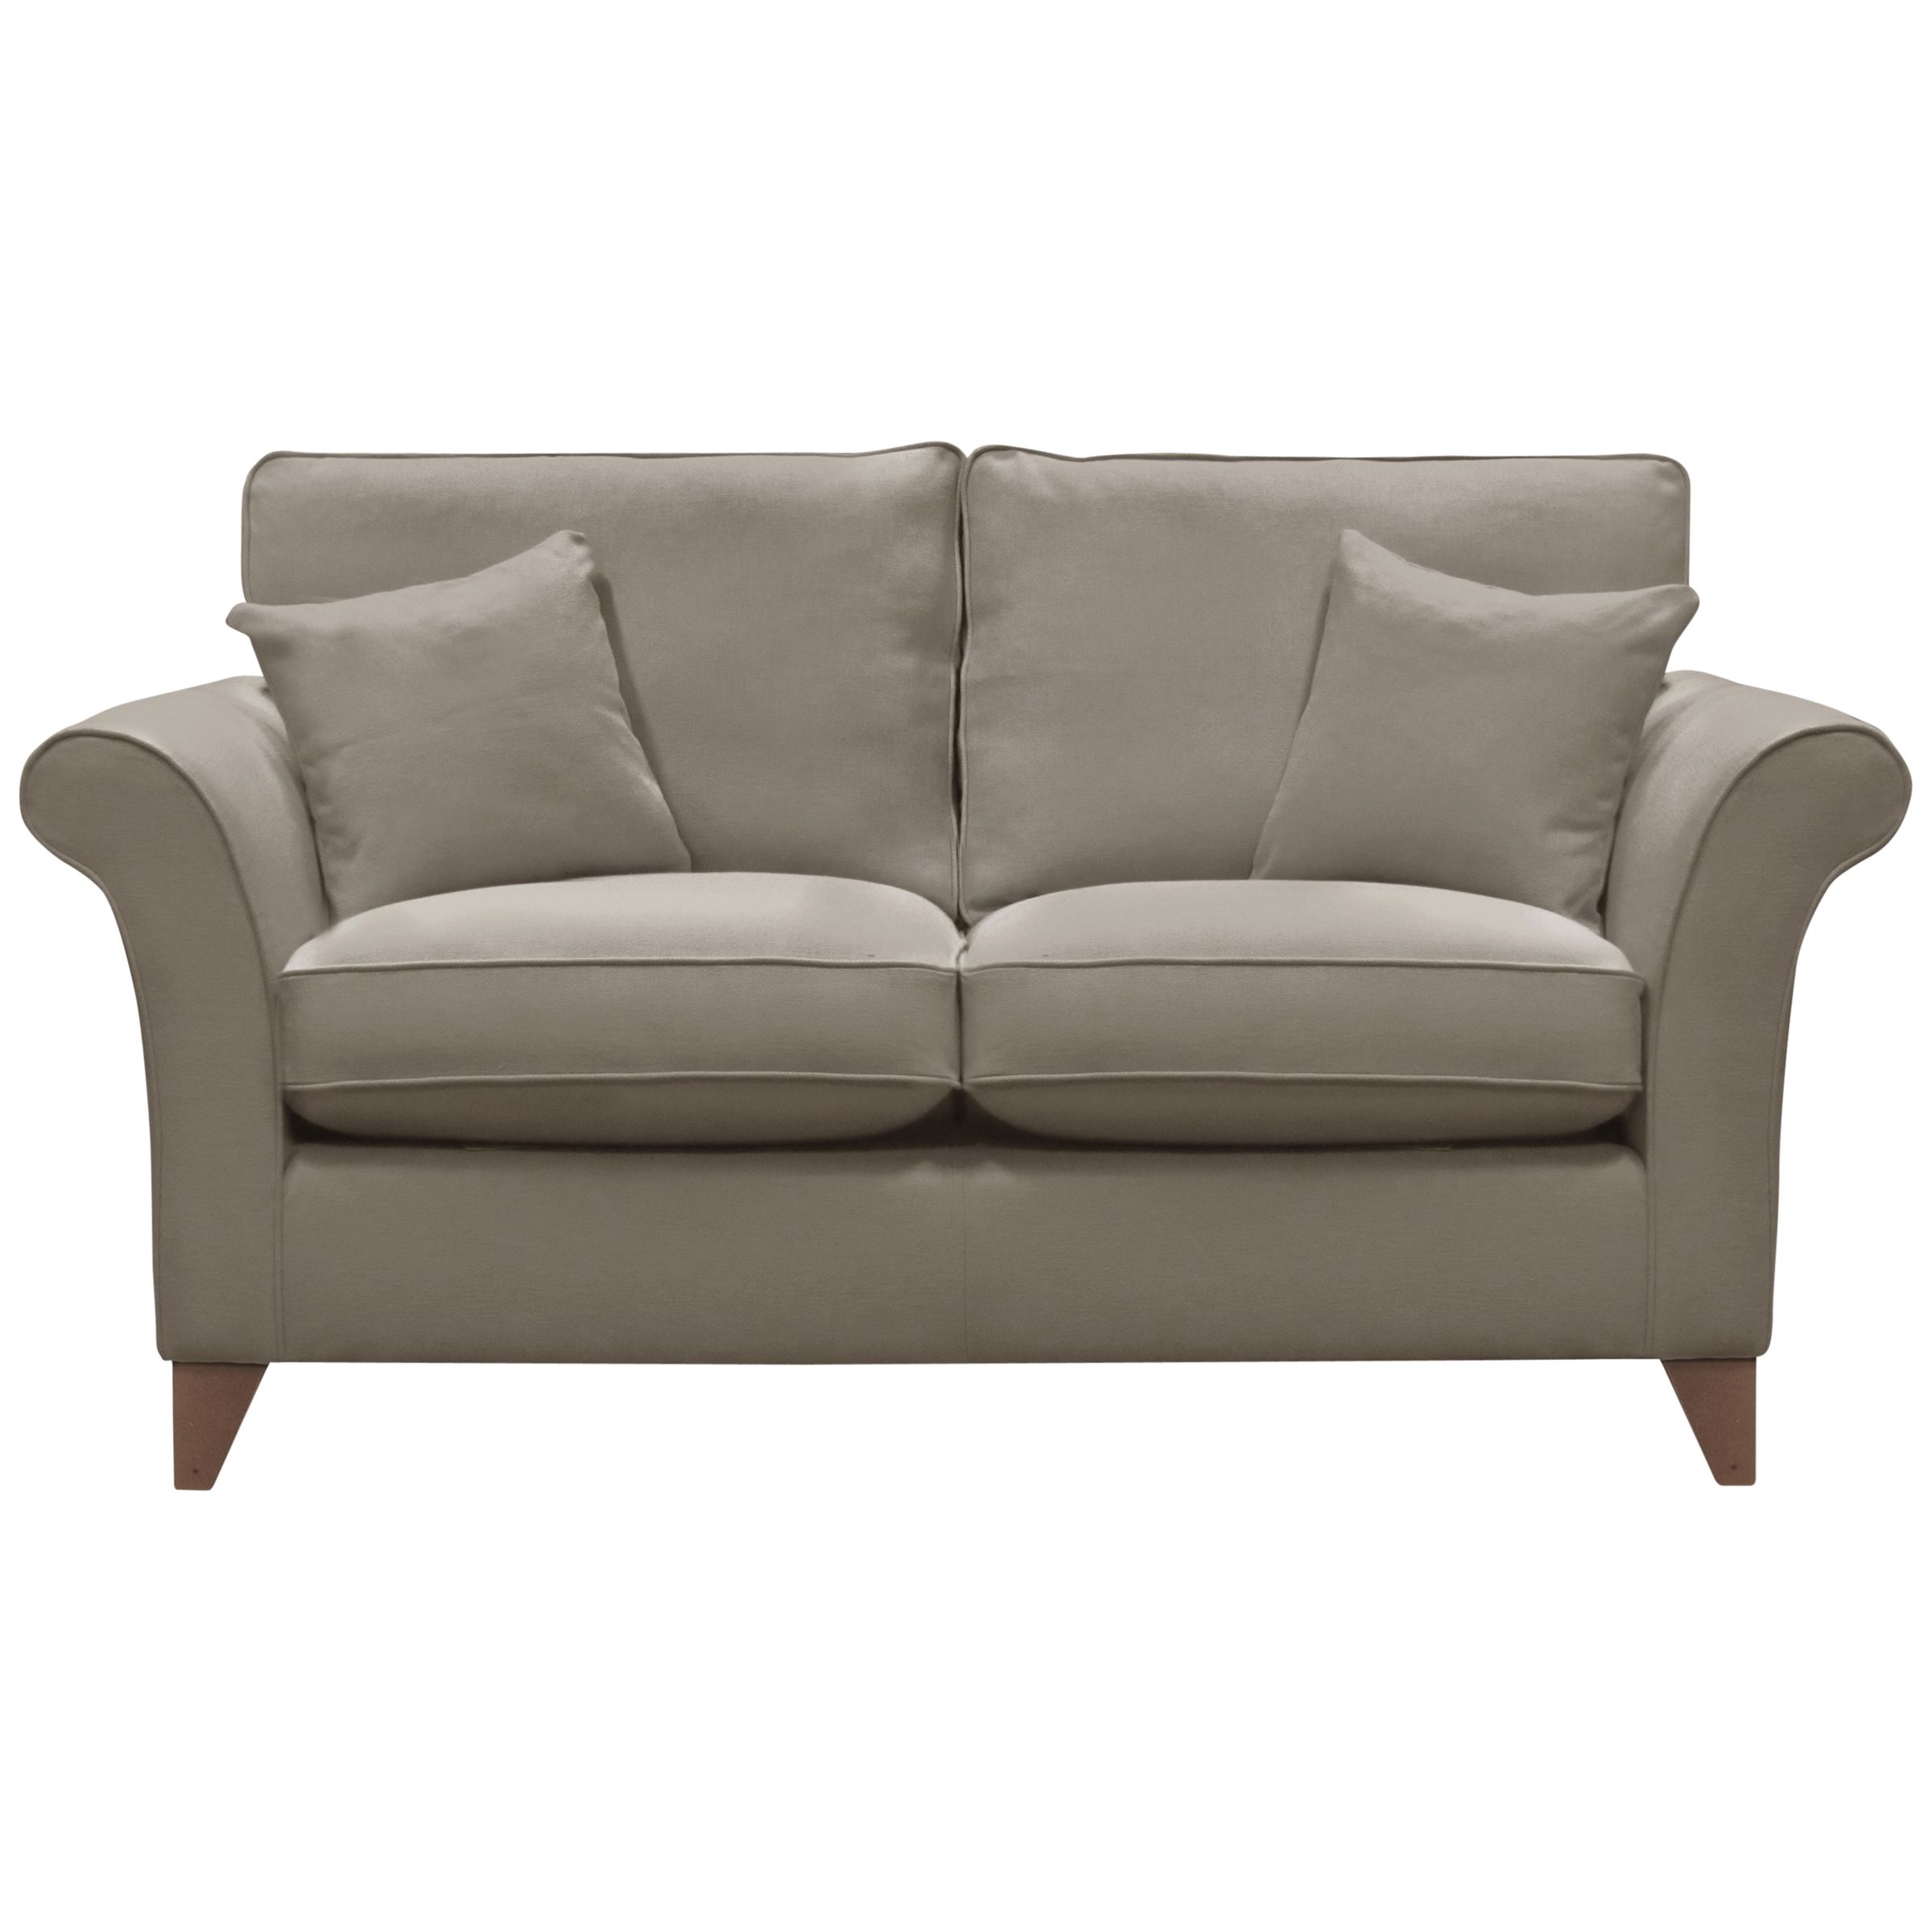 John Lewis Charlotte Medium Sofa, Lotus Taupe, width 177cm